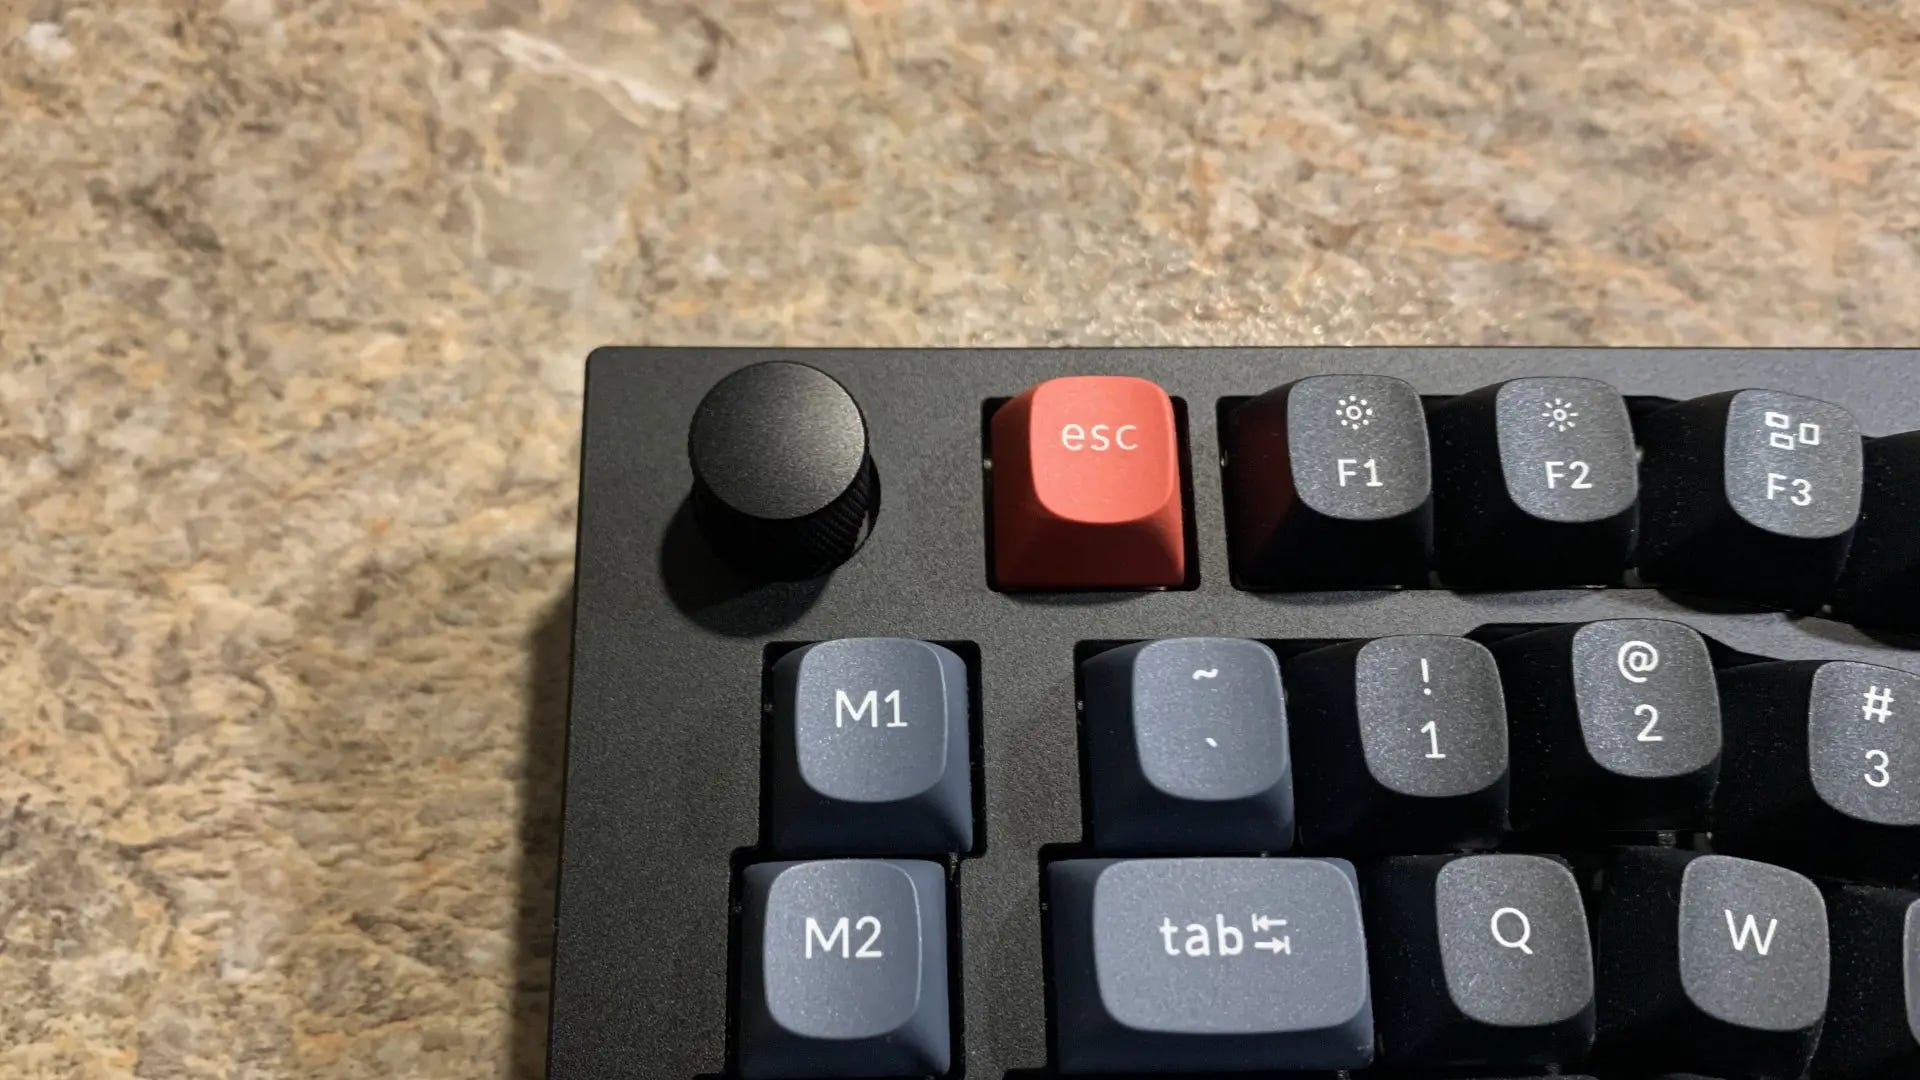 Keychron Q10 keyboard volume knob